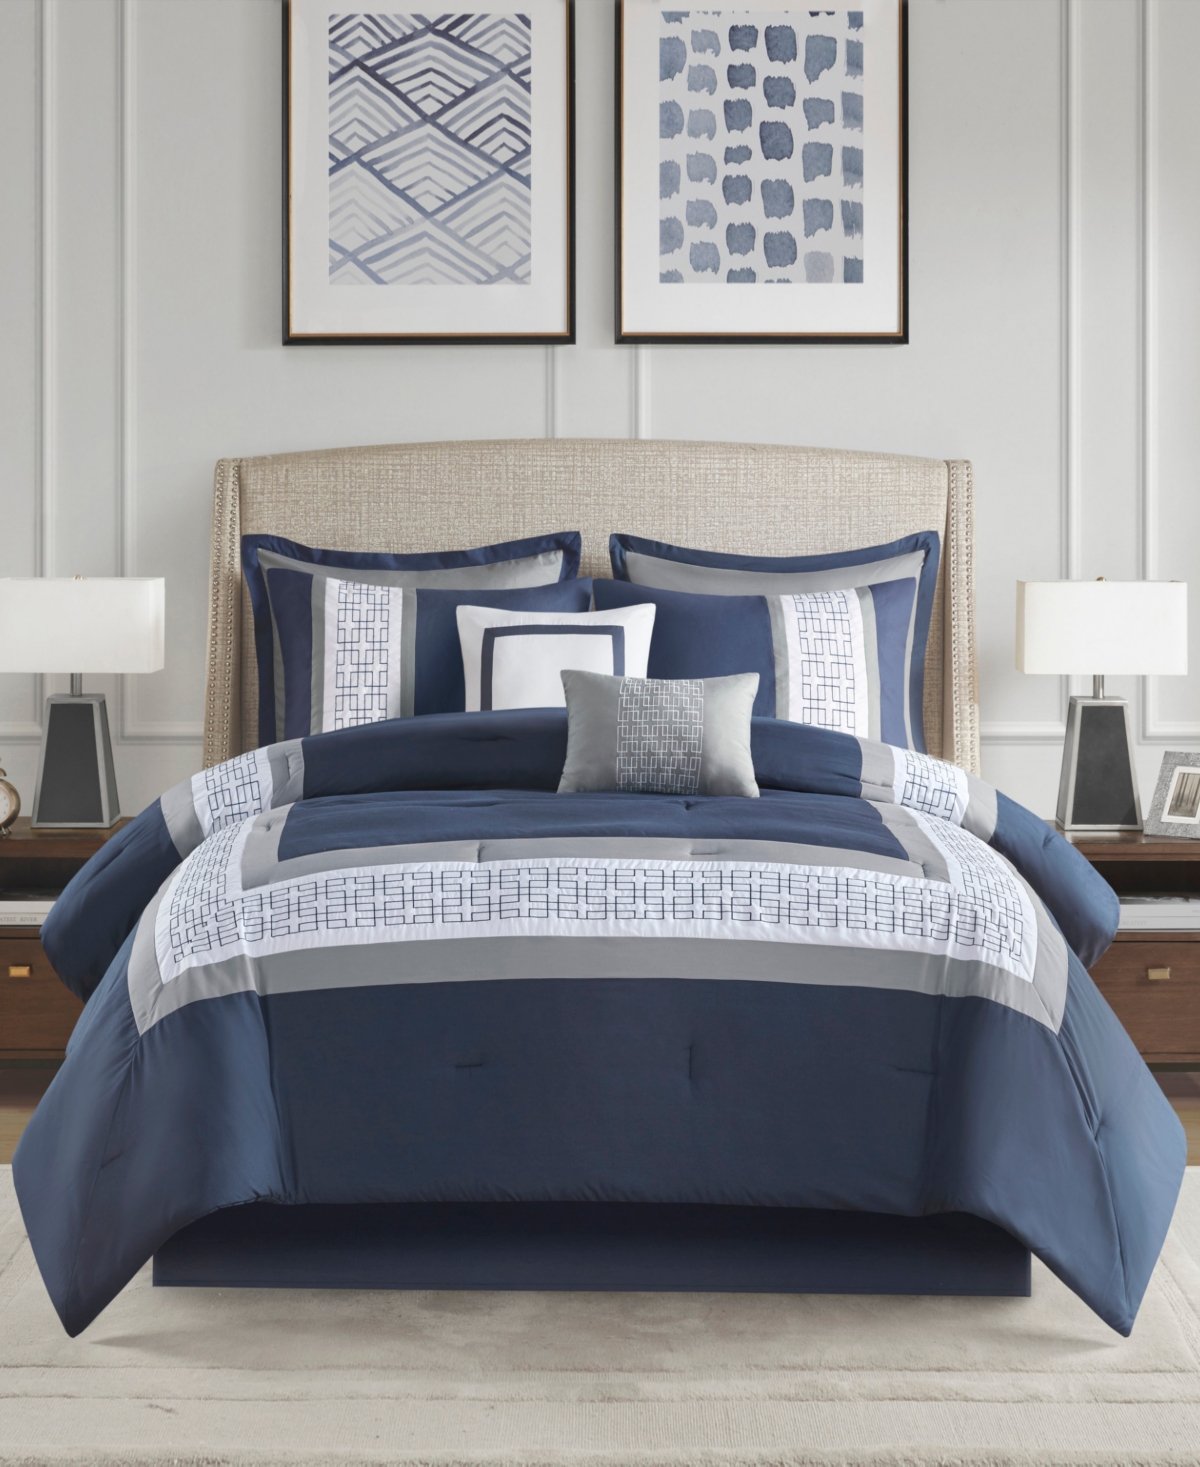 510 Design Powell Embroidered 8 Piece Comforter Set, California King Bedding